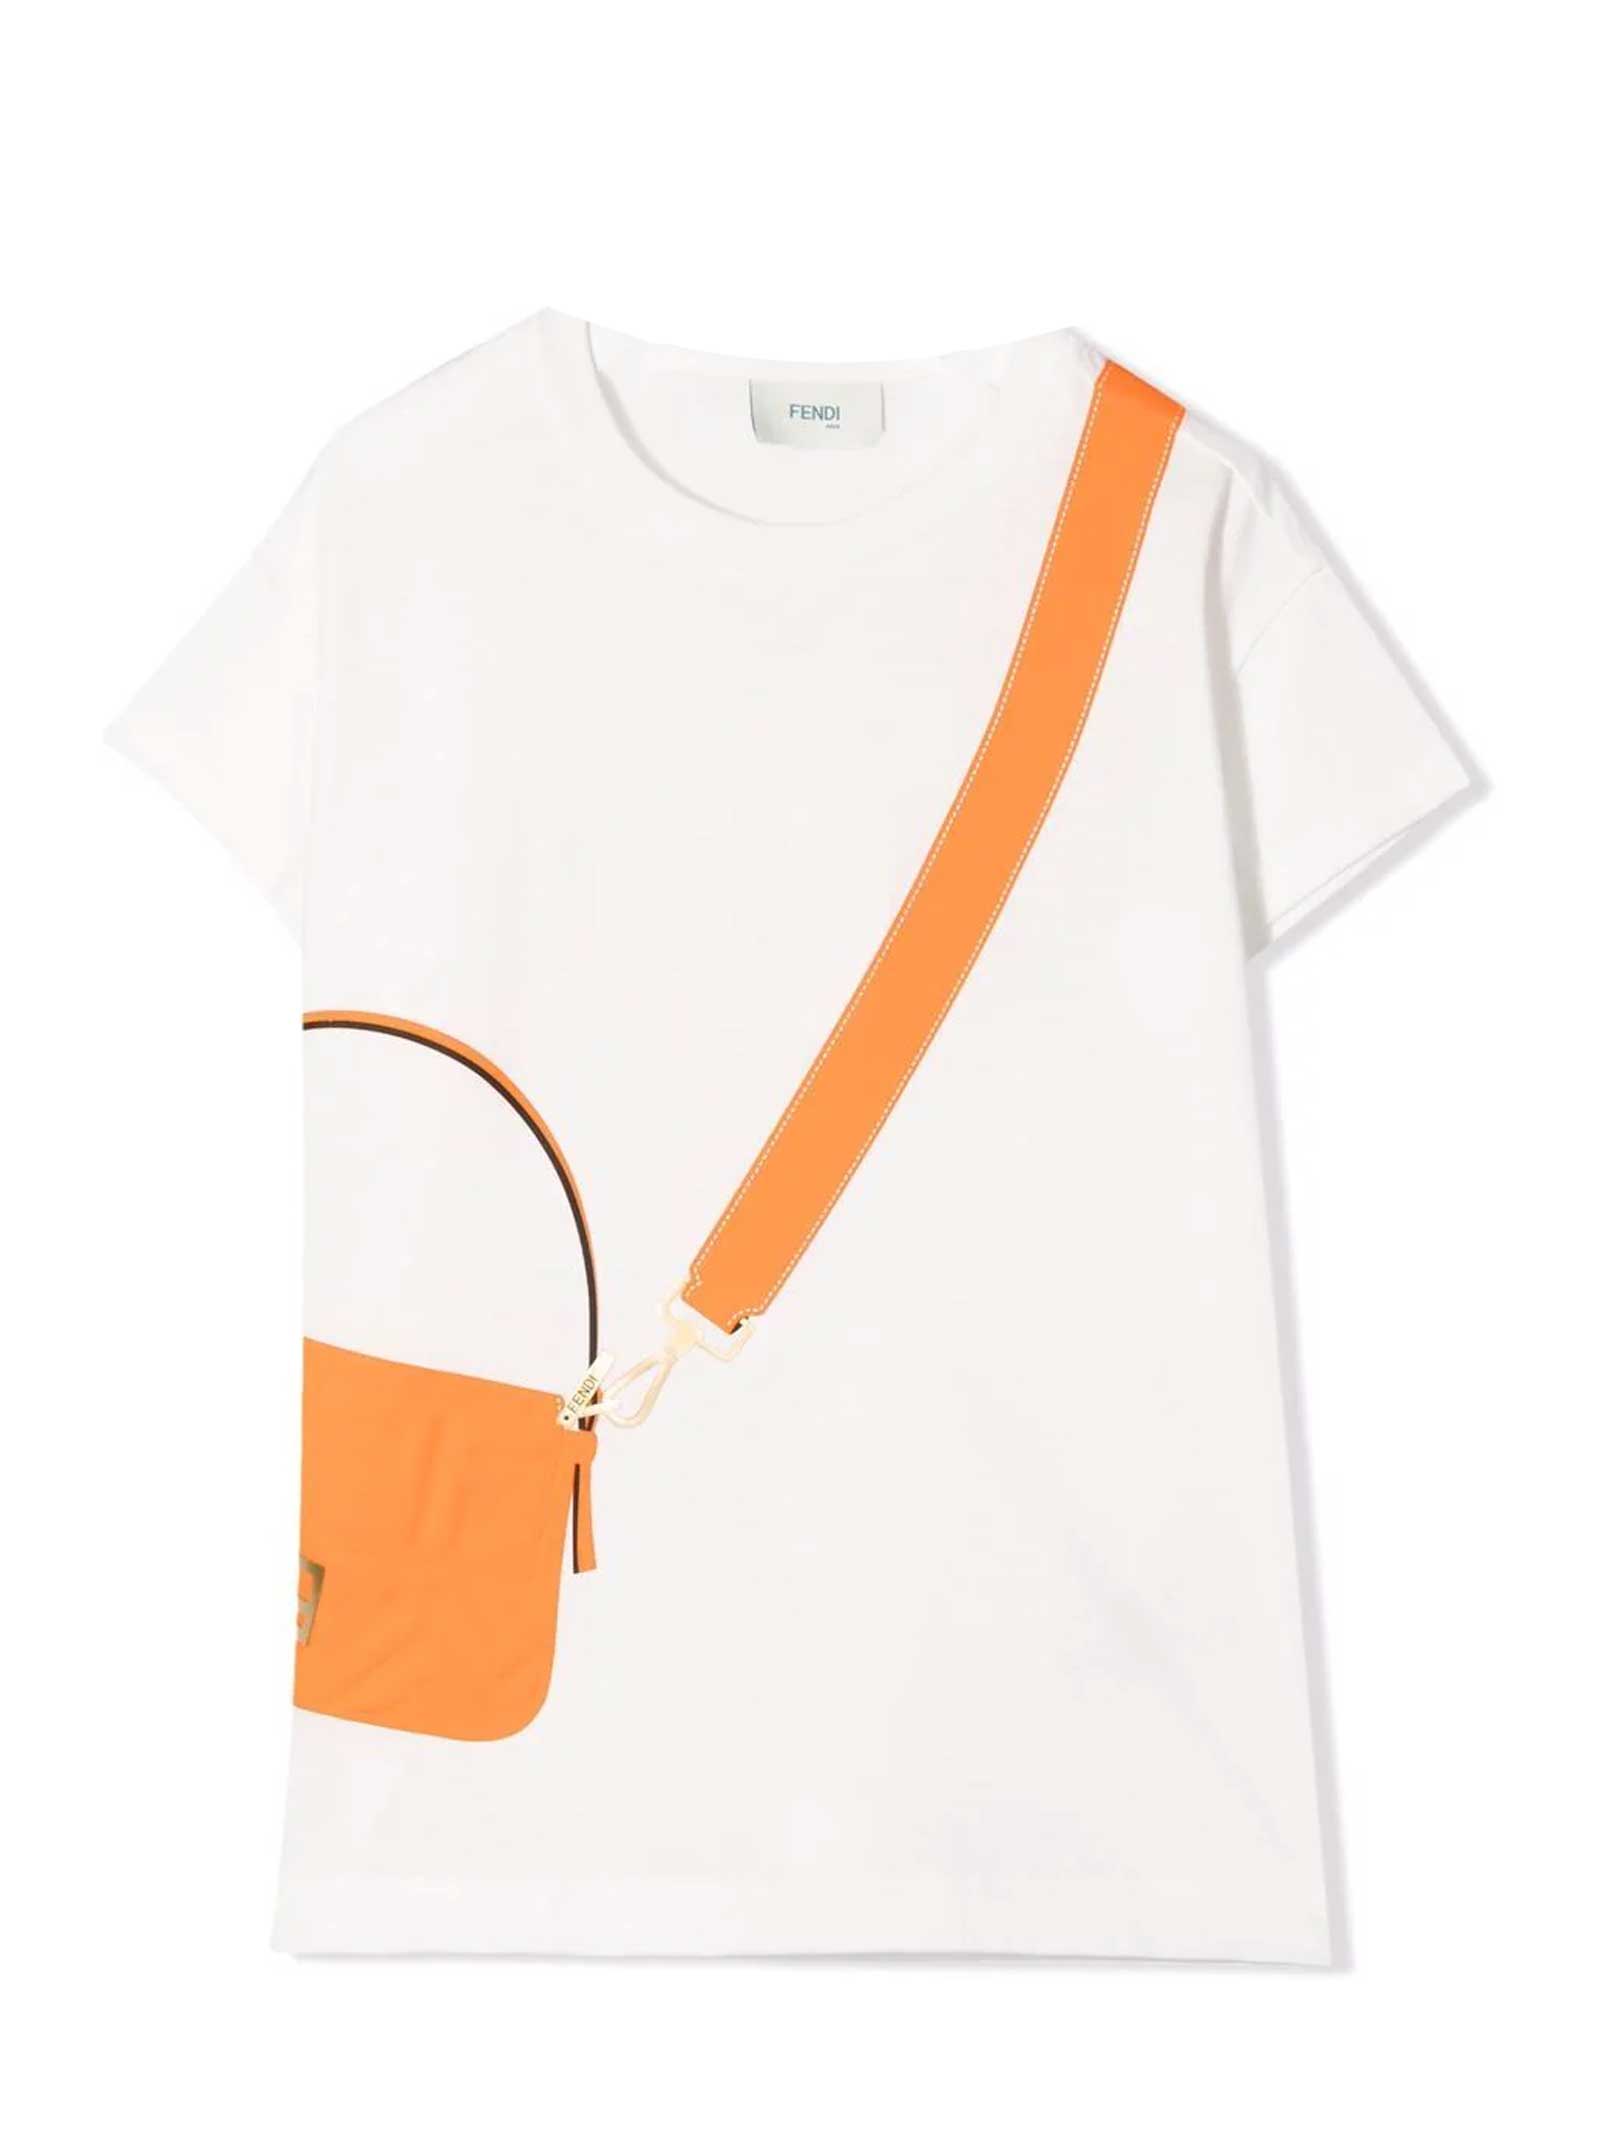 Fendi White T-shirt With Orange Print